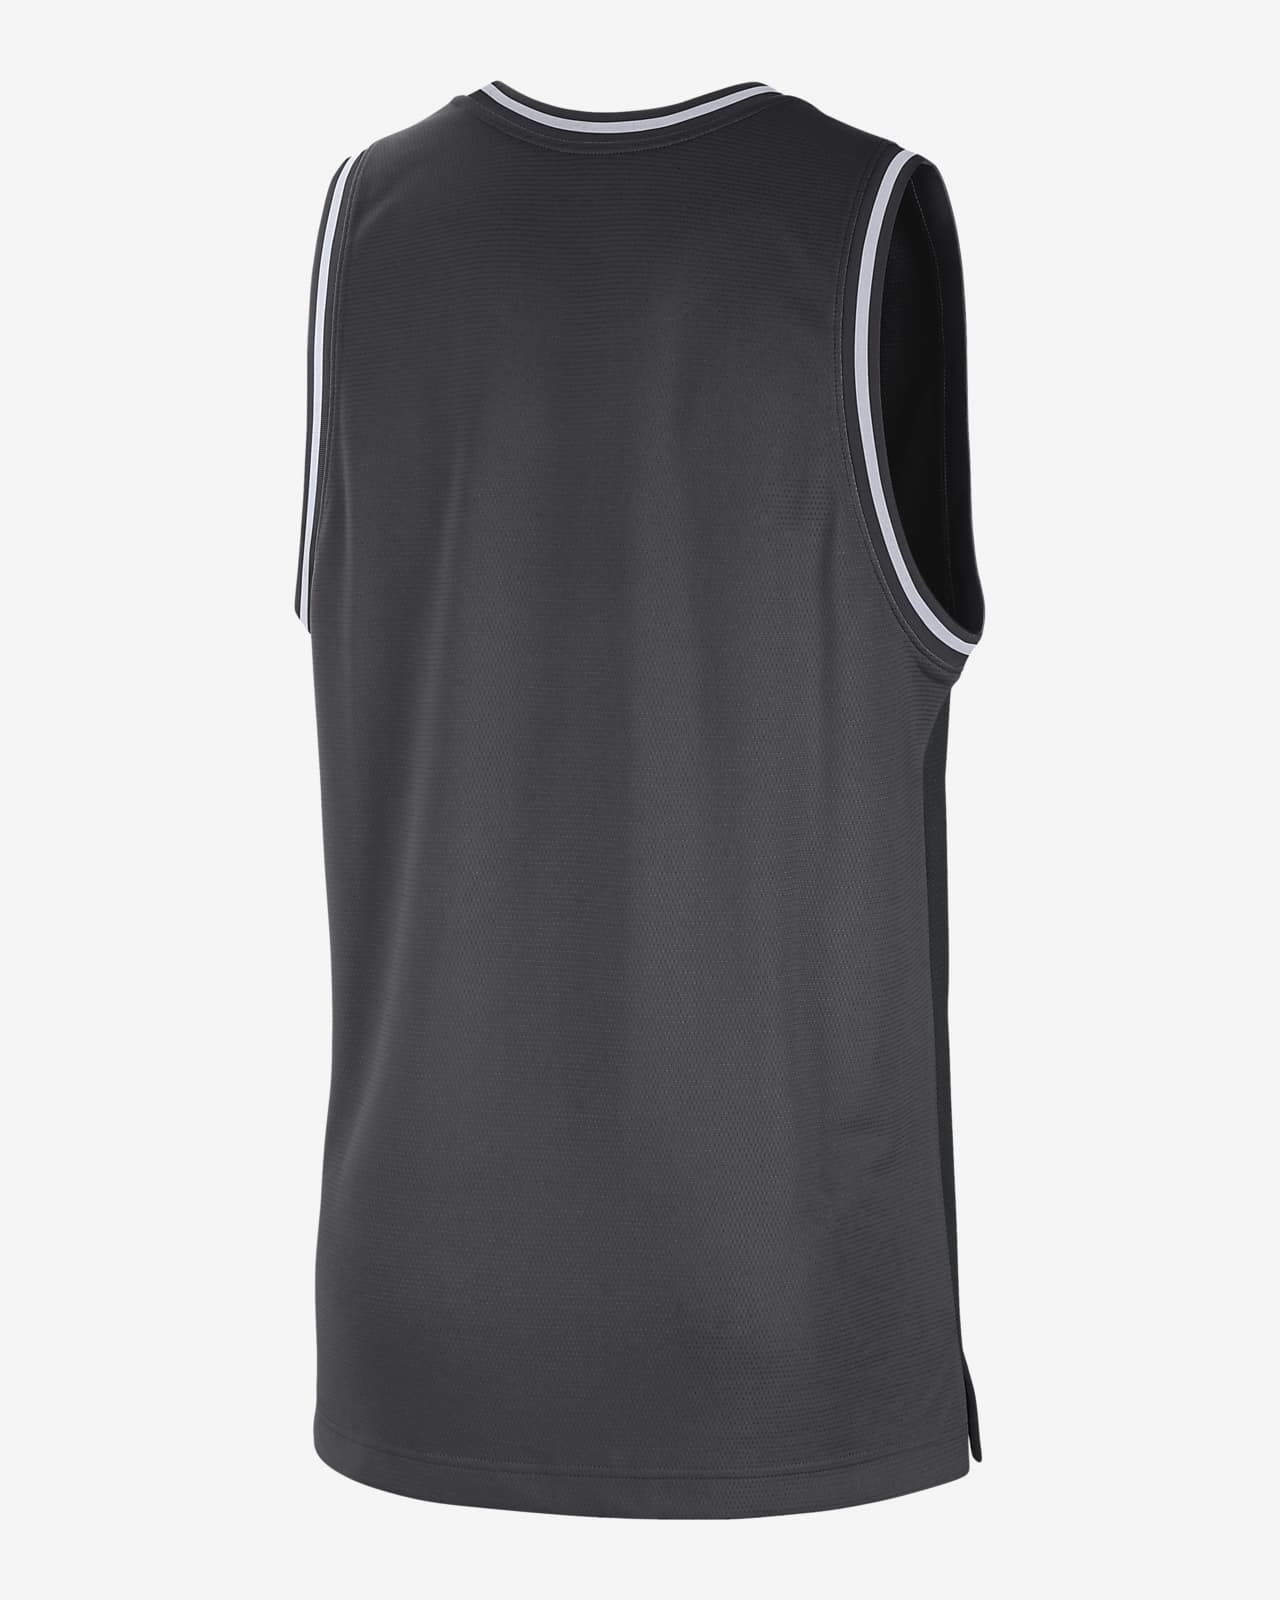 shirt blank black basketball jersey